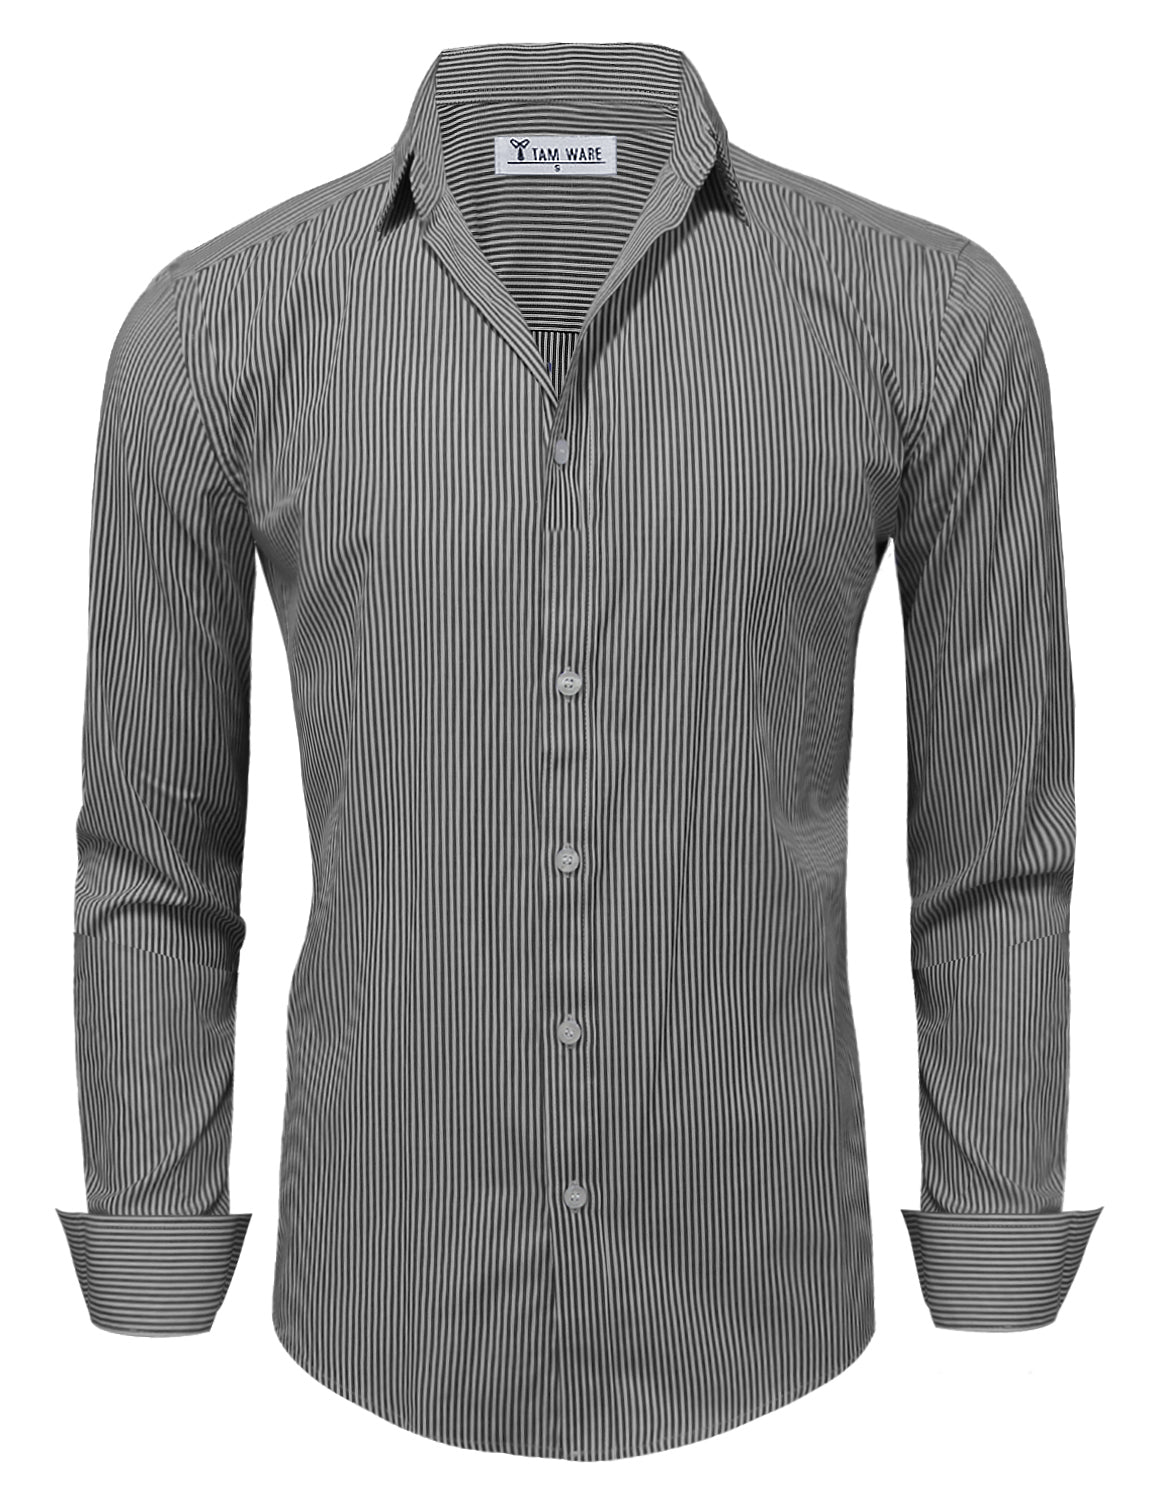 Black And White Vertical Striped T Shirt Mens - Ghana tips